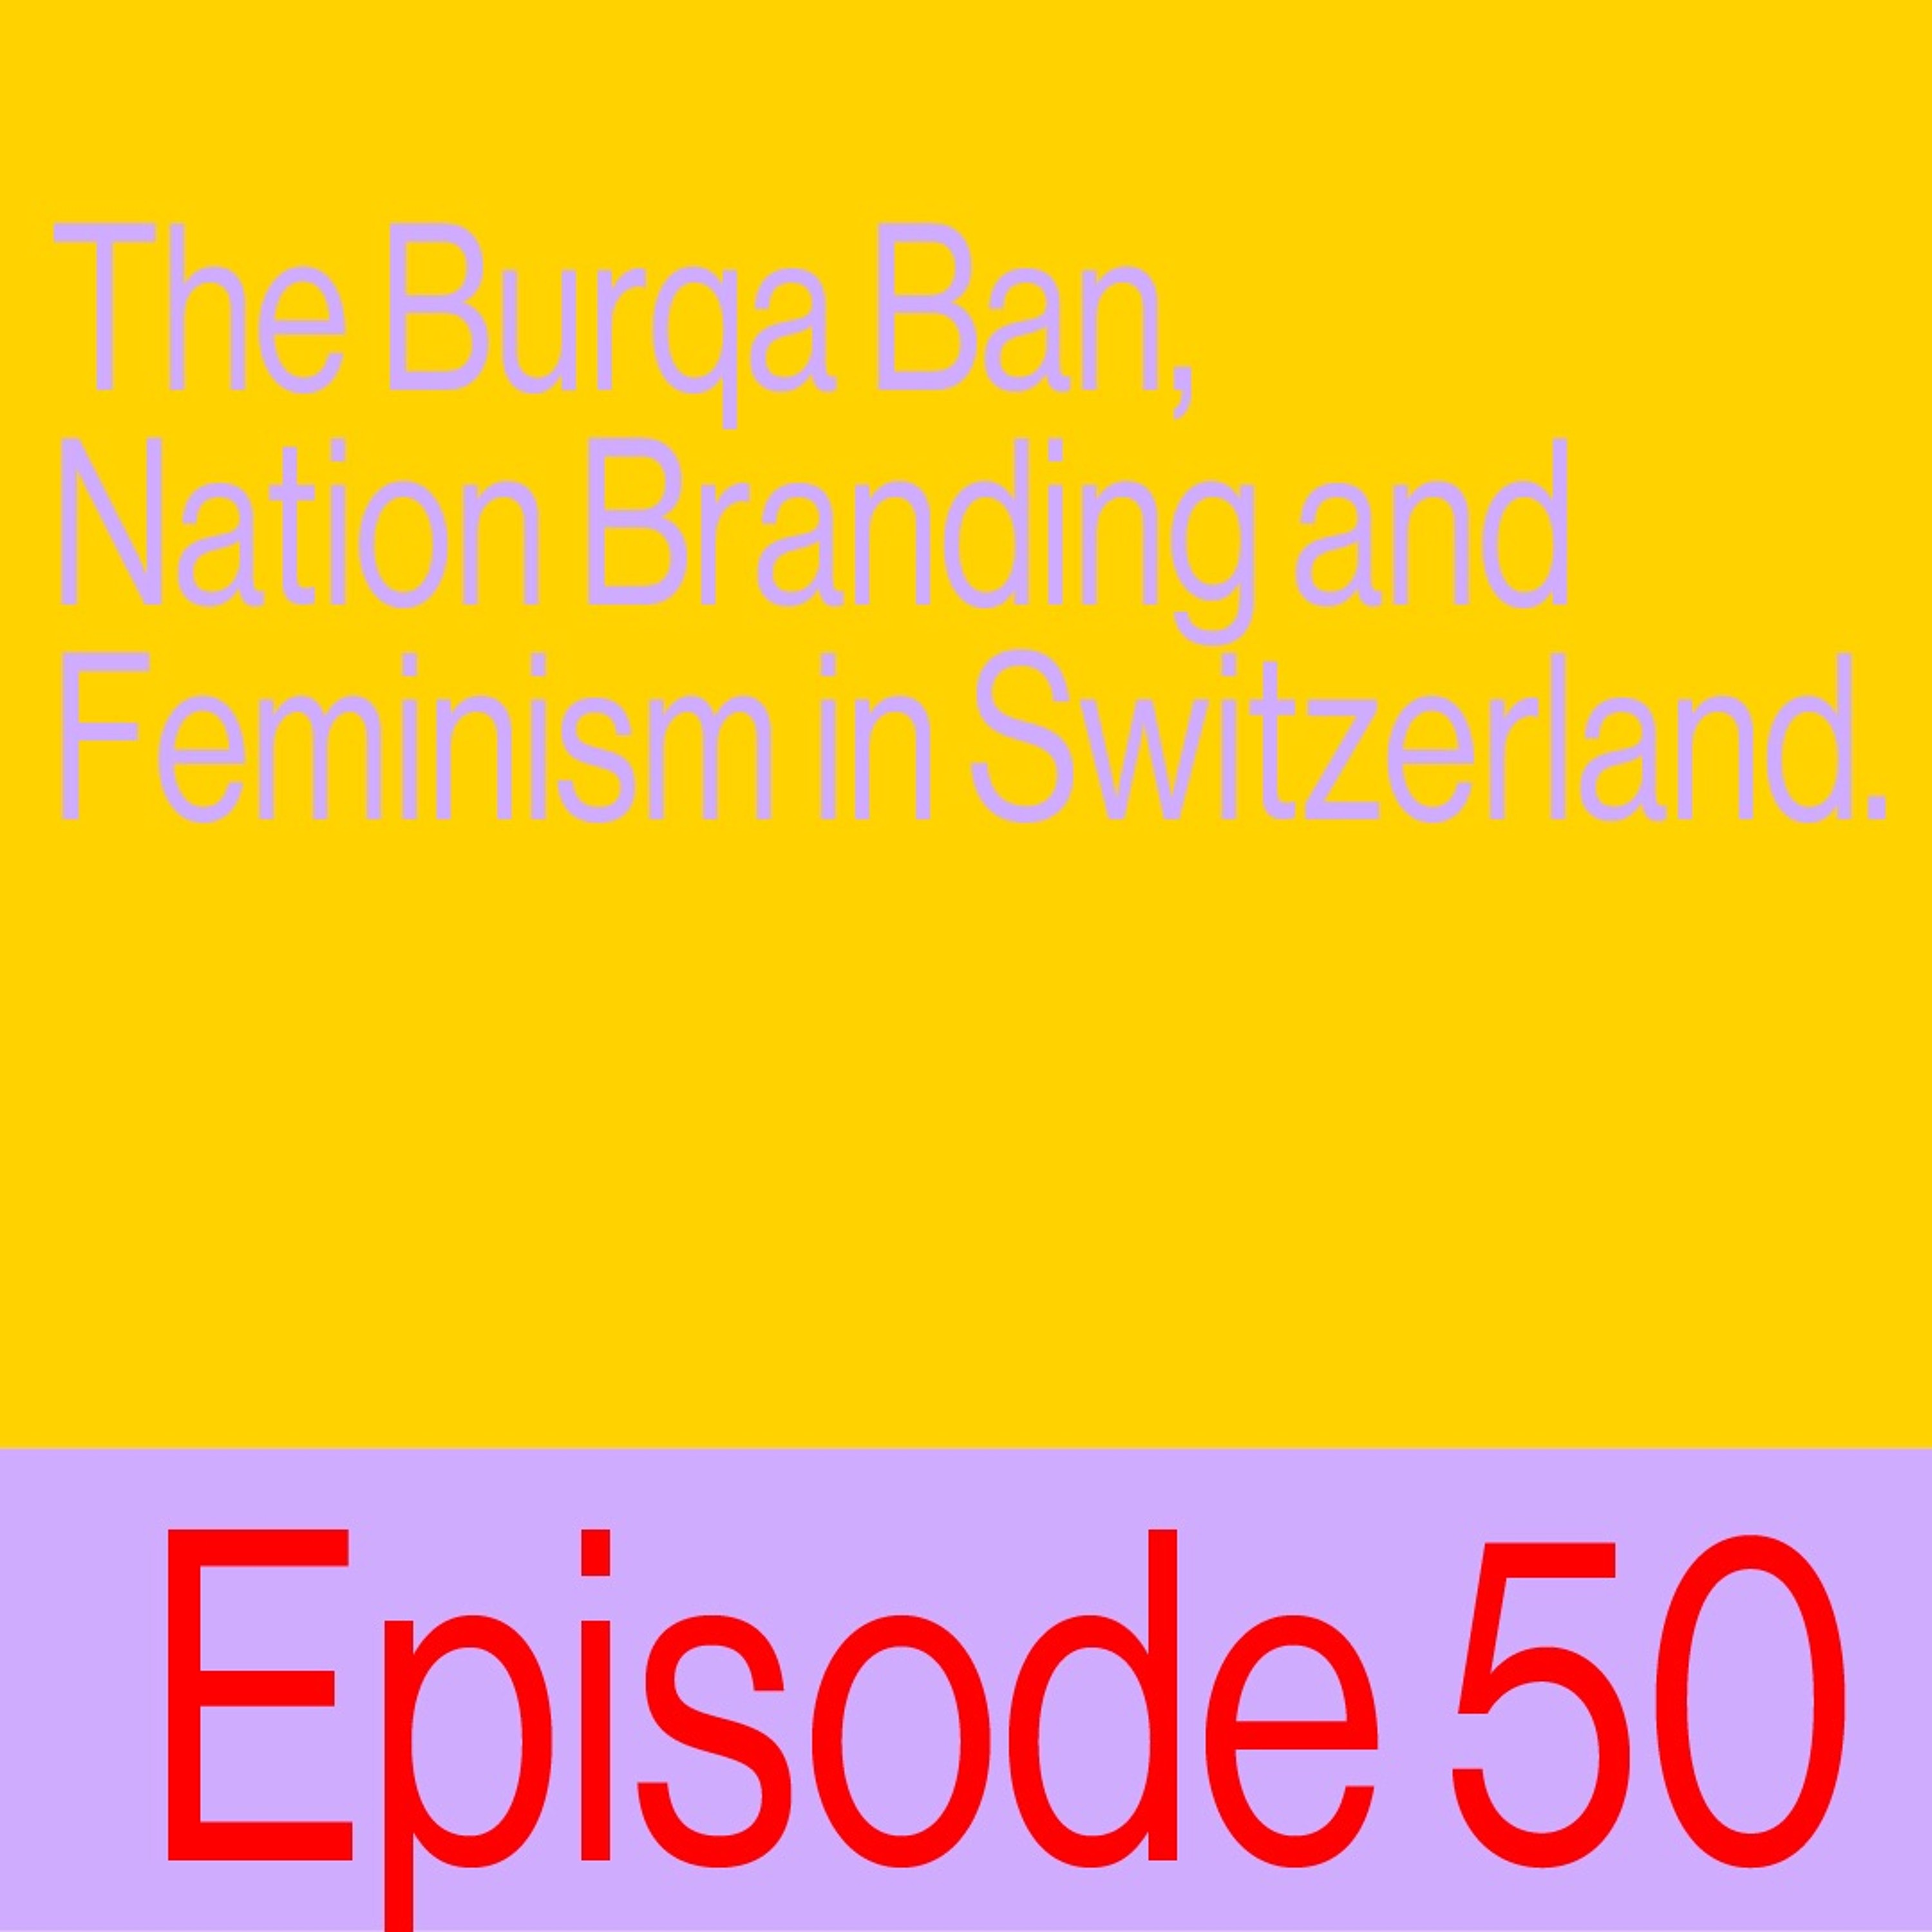 Episode 50: The Burqa Ban, Nation Branding, and Feminism In Switzerland